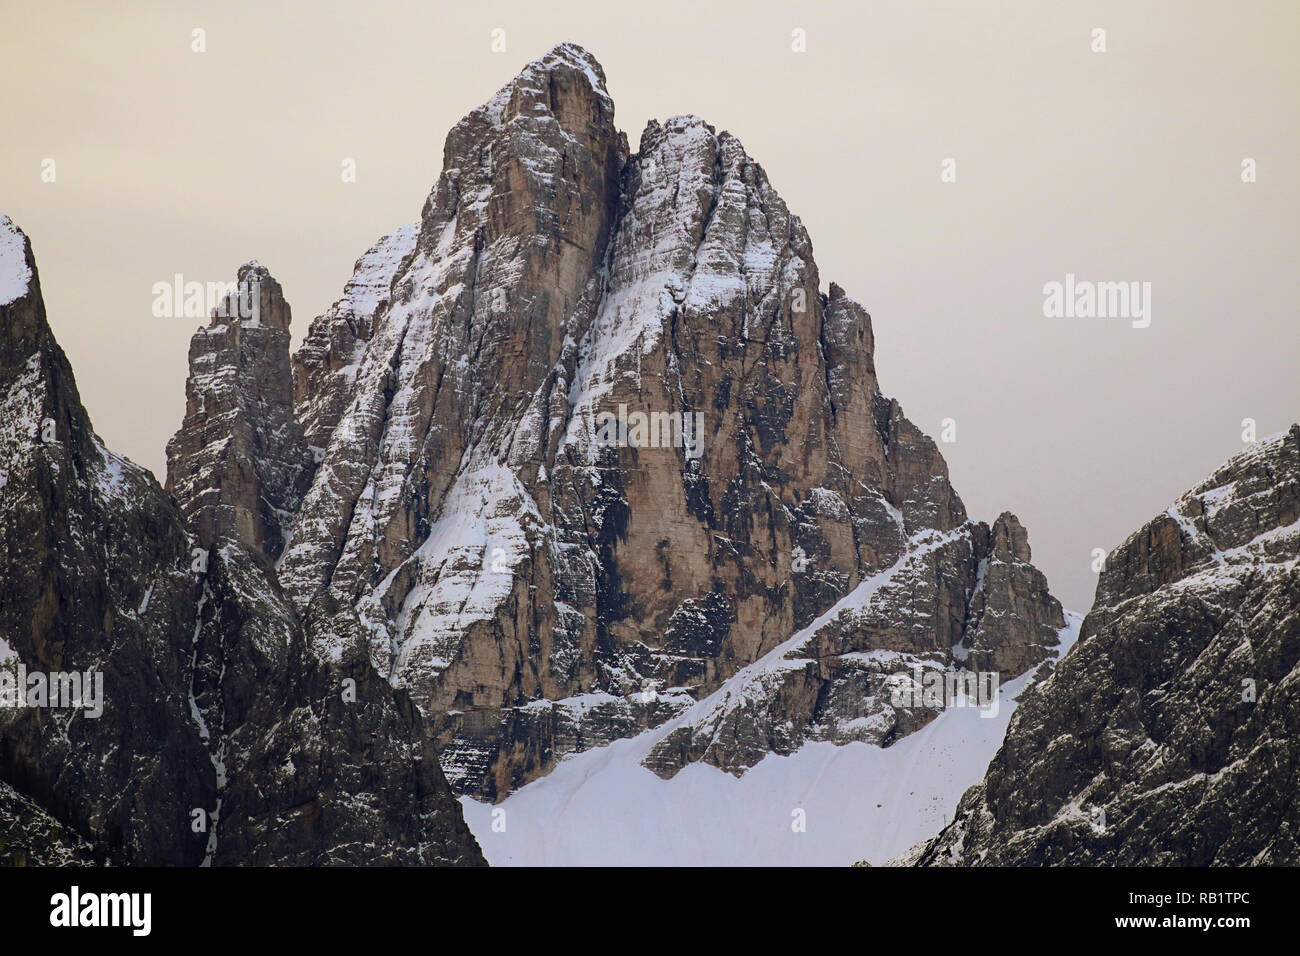 Dolomiti di Sesto, Italie (Dolomites de Sesto), vue panoramique de la Croda dei Toni , montagne Dolomites des Alpes italiennes Banque D'Images